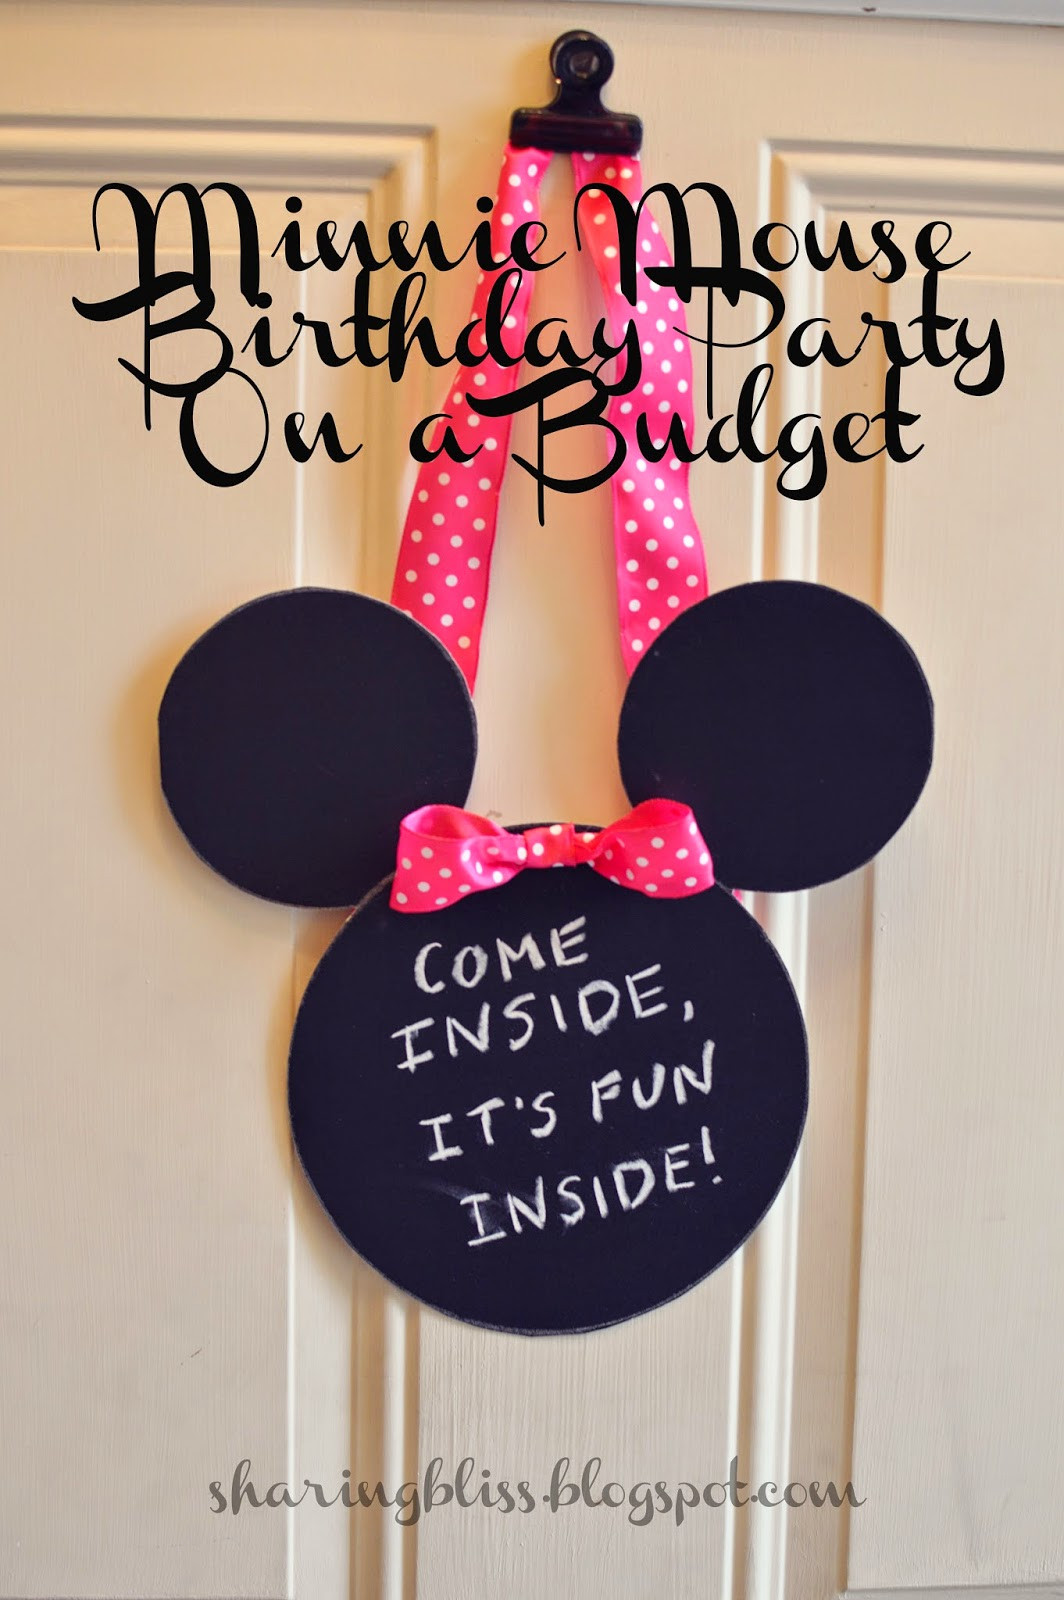 Minnie Birthday Decorations
 Minnie Mouse Birthday Party on a Bud